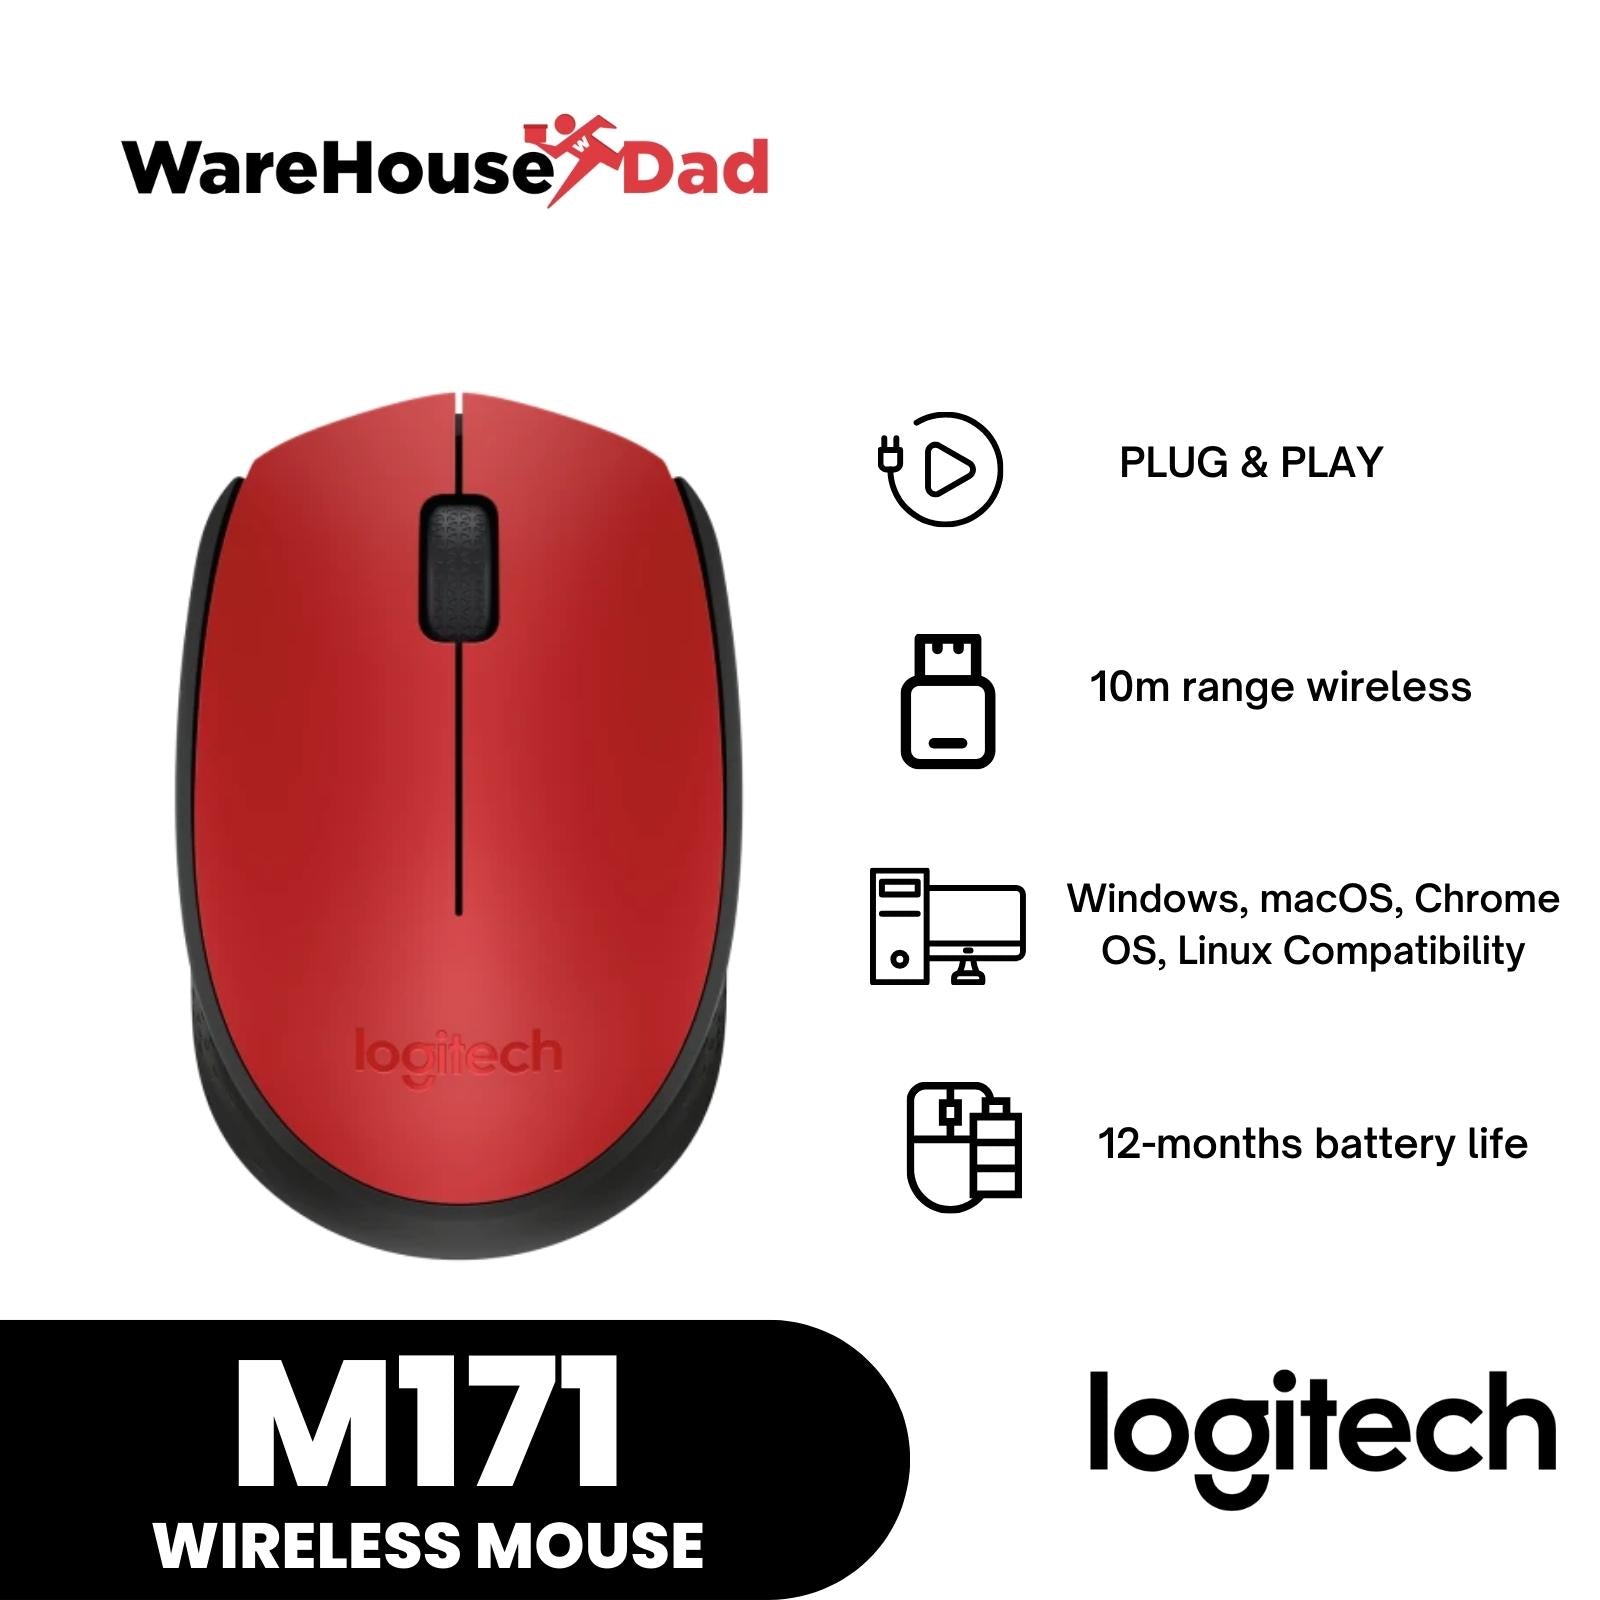 – Play & M171 WarehouseDad Wireless Logitech Plug Mouse Simplicity